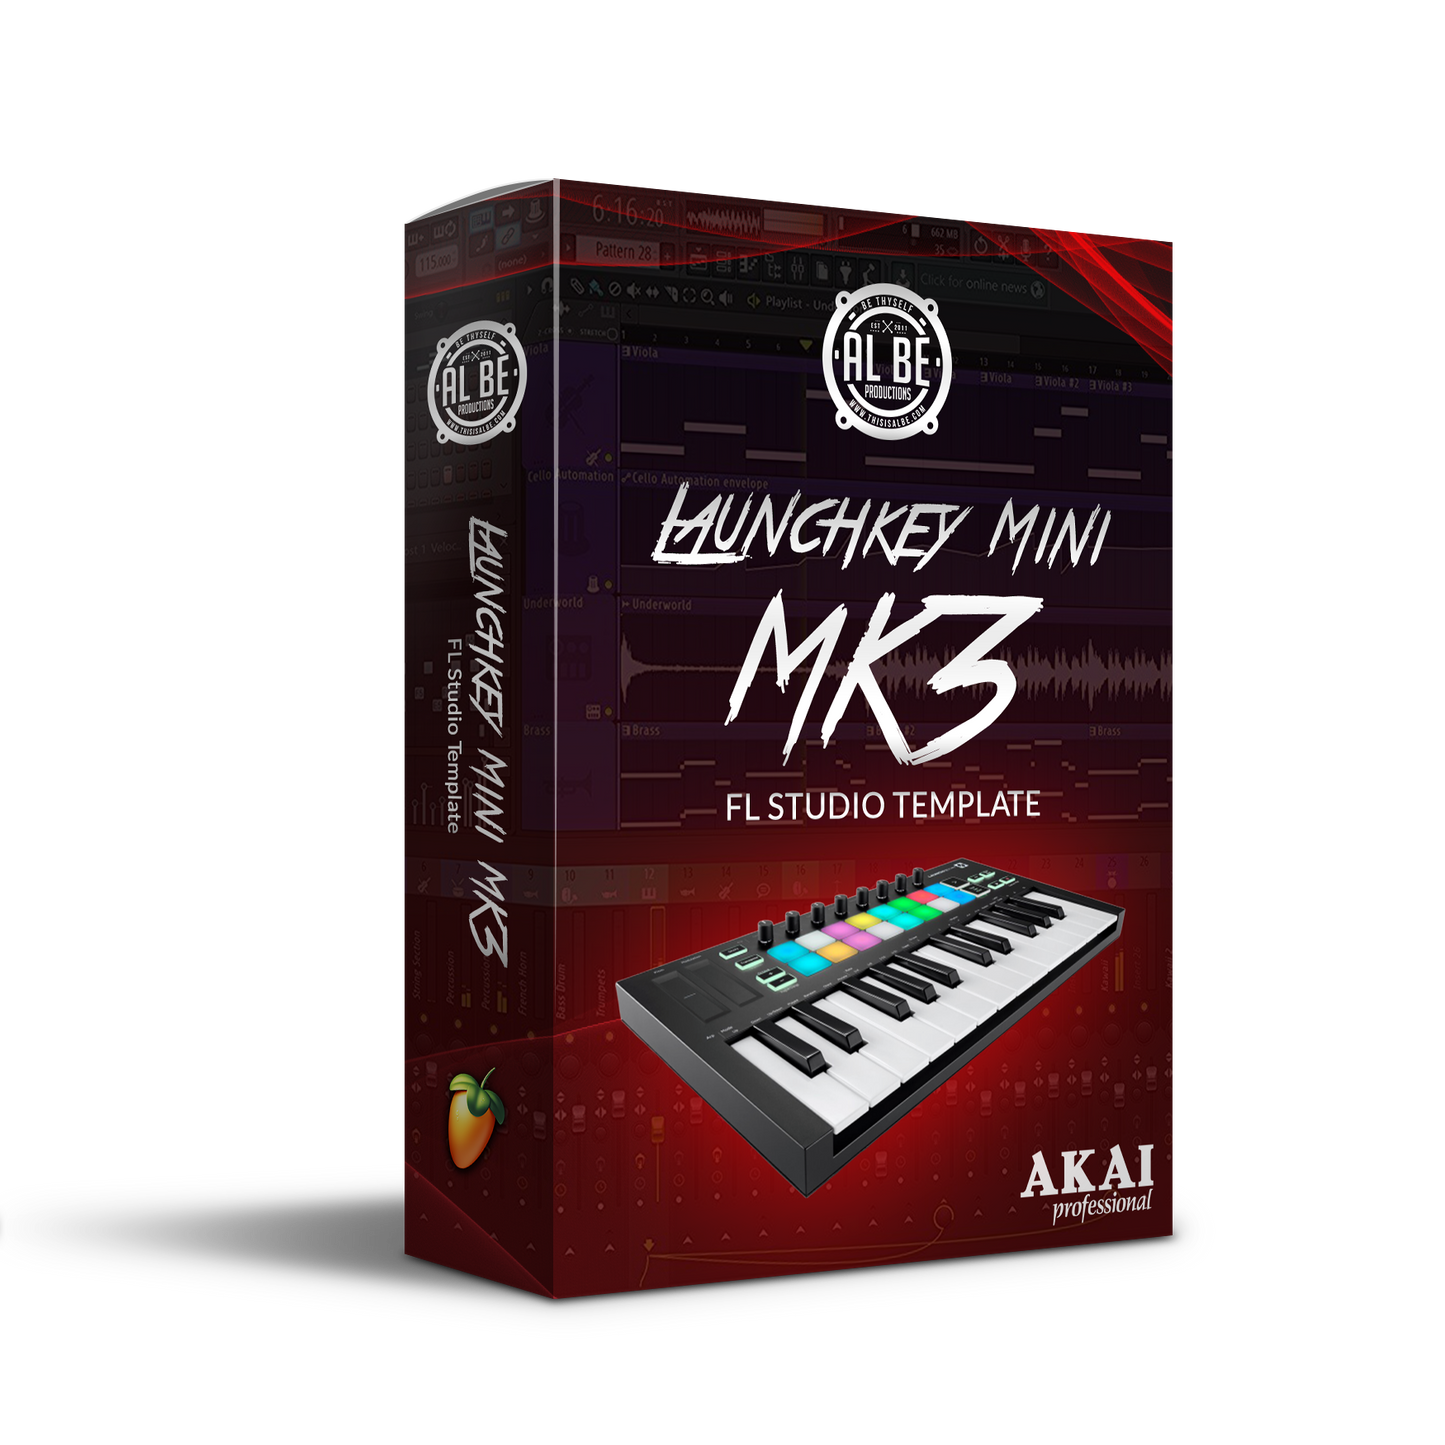 Launchkey Mini MK3 FL Studio Template